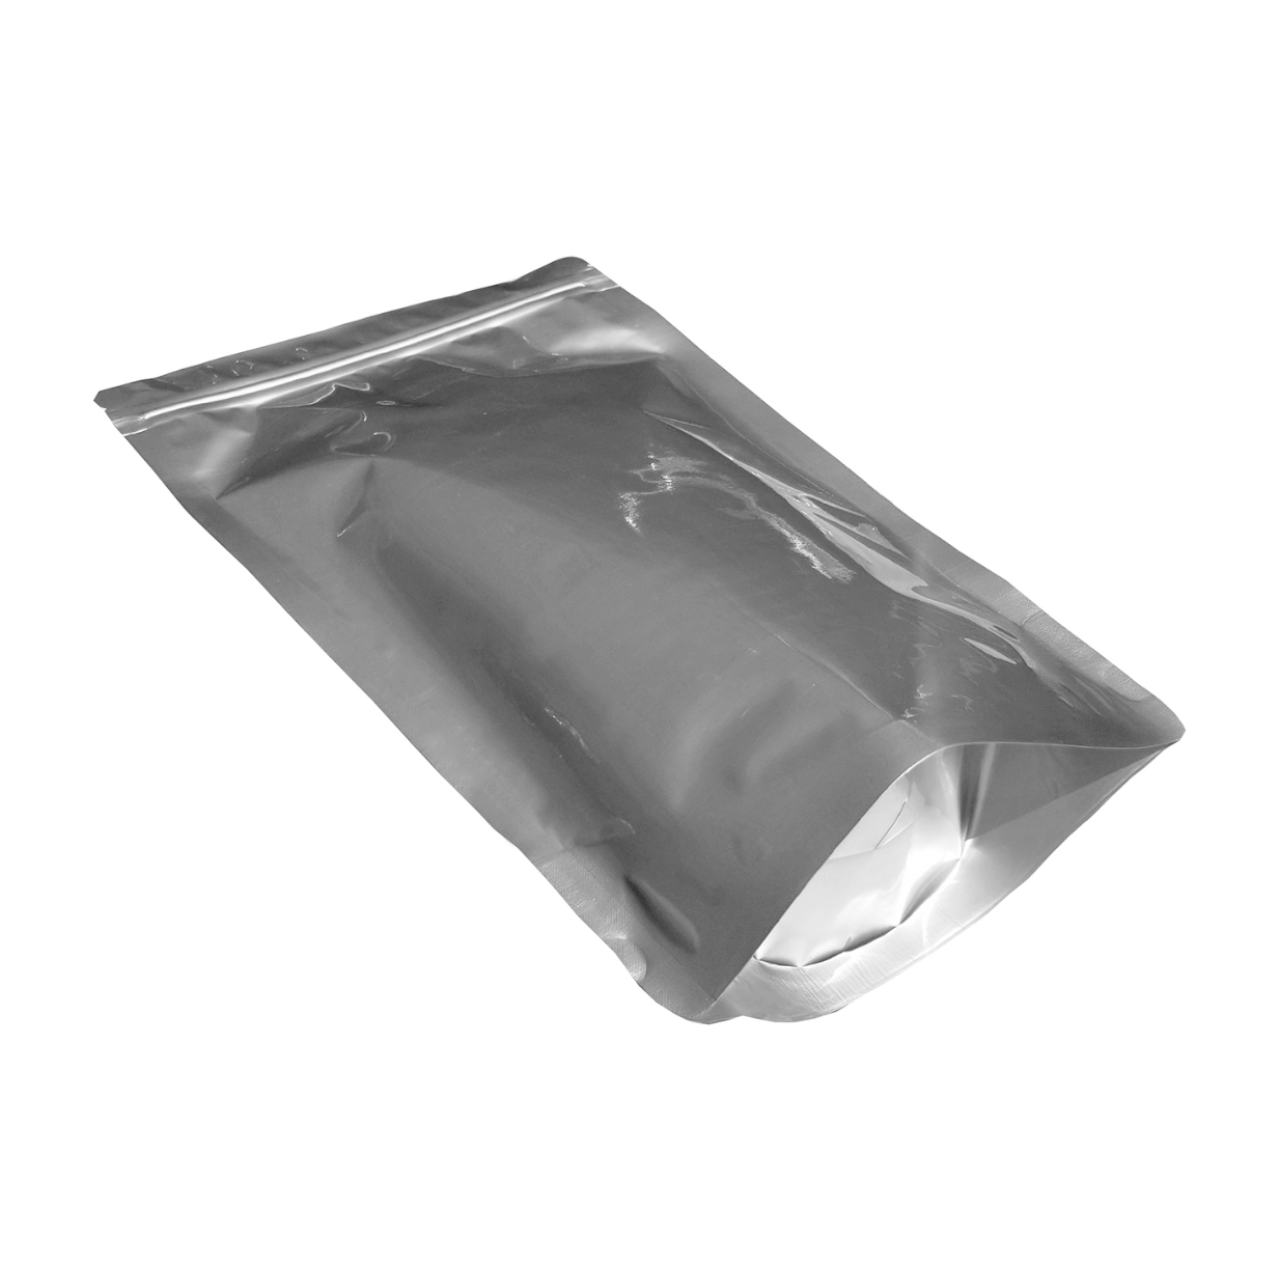 Half Gallon Mylar Bag With Ziplock Case